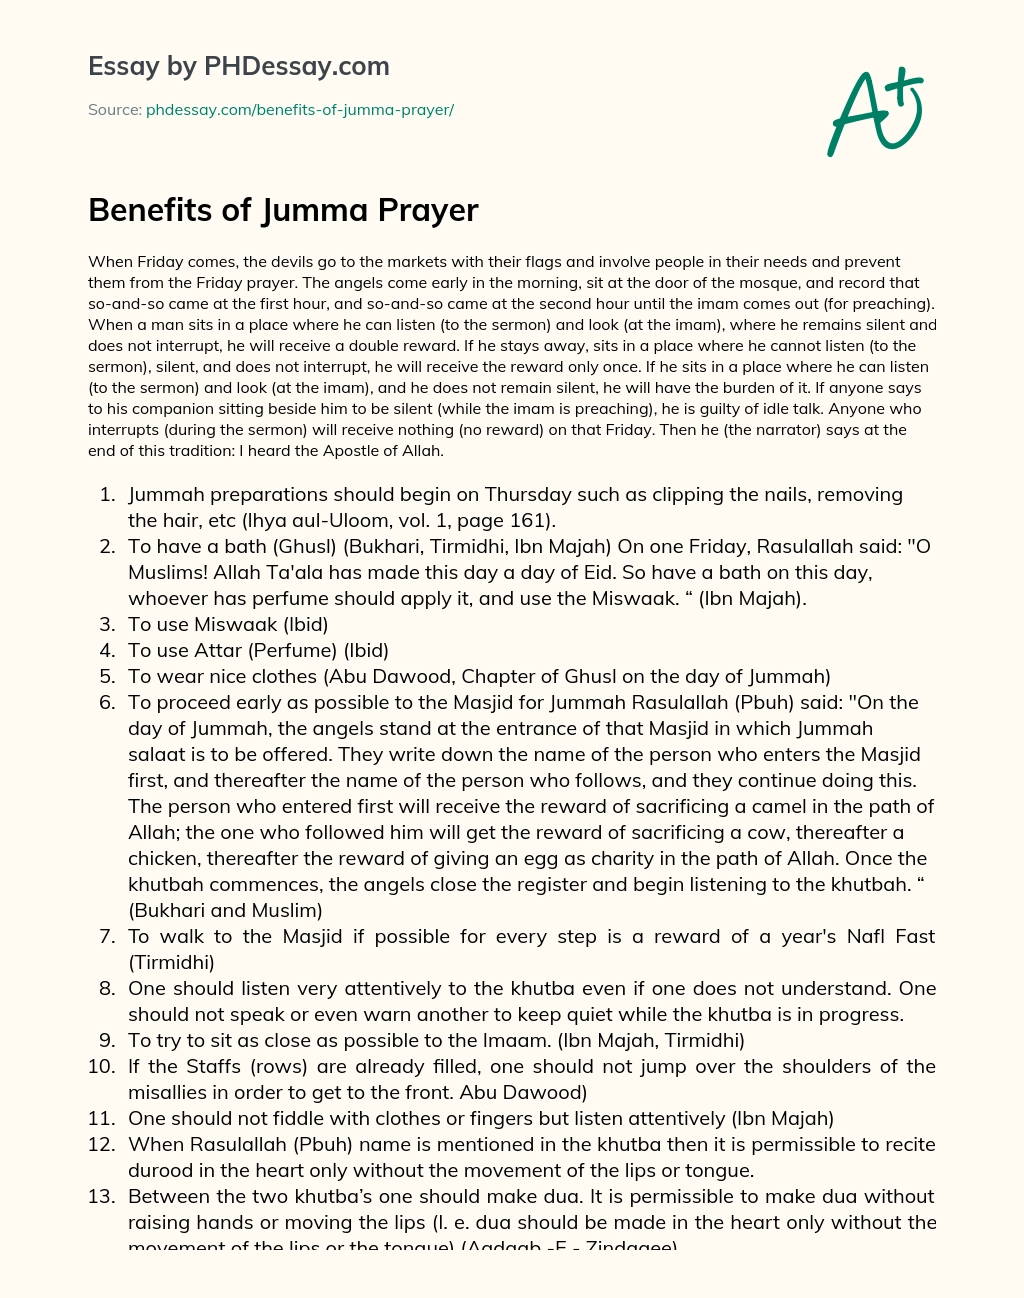 Benefits of Jumma Prayer essay